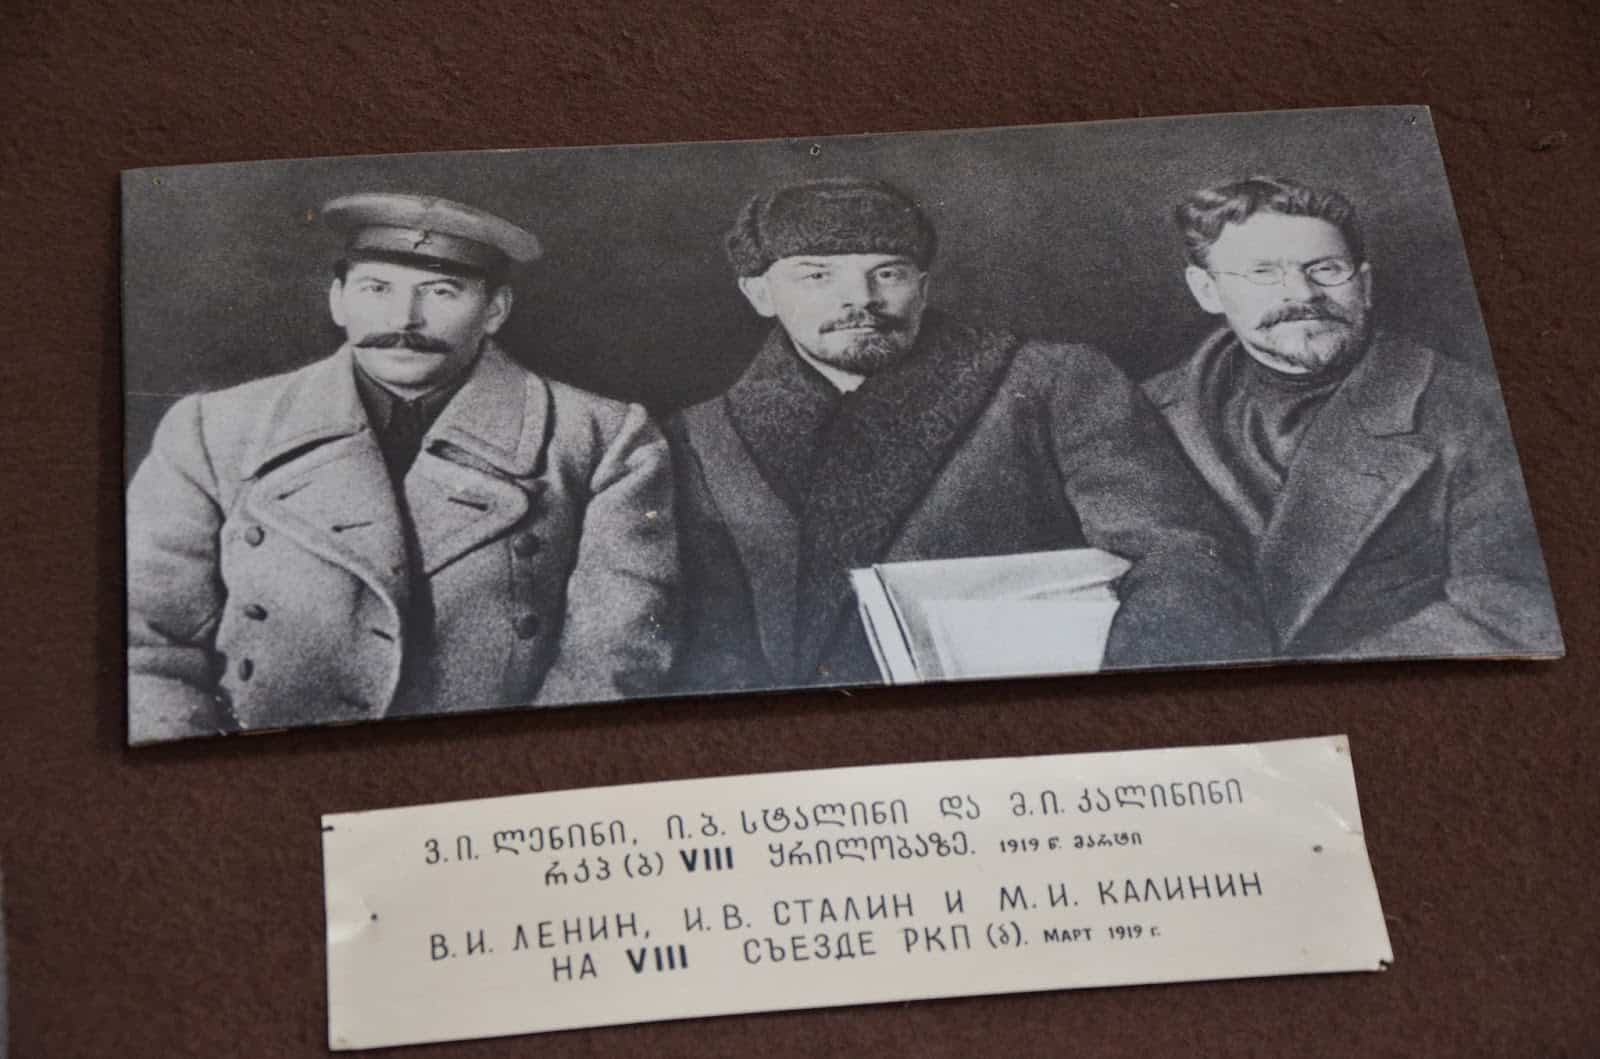 Joseph Stalin, Lenin, and Kalinin at the Joseph Stalin Museum in Gori, Georgia